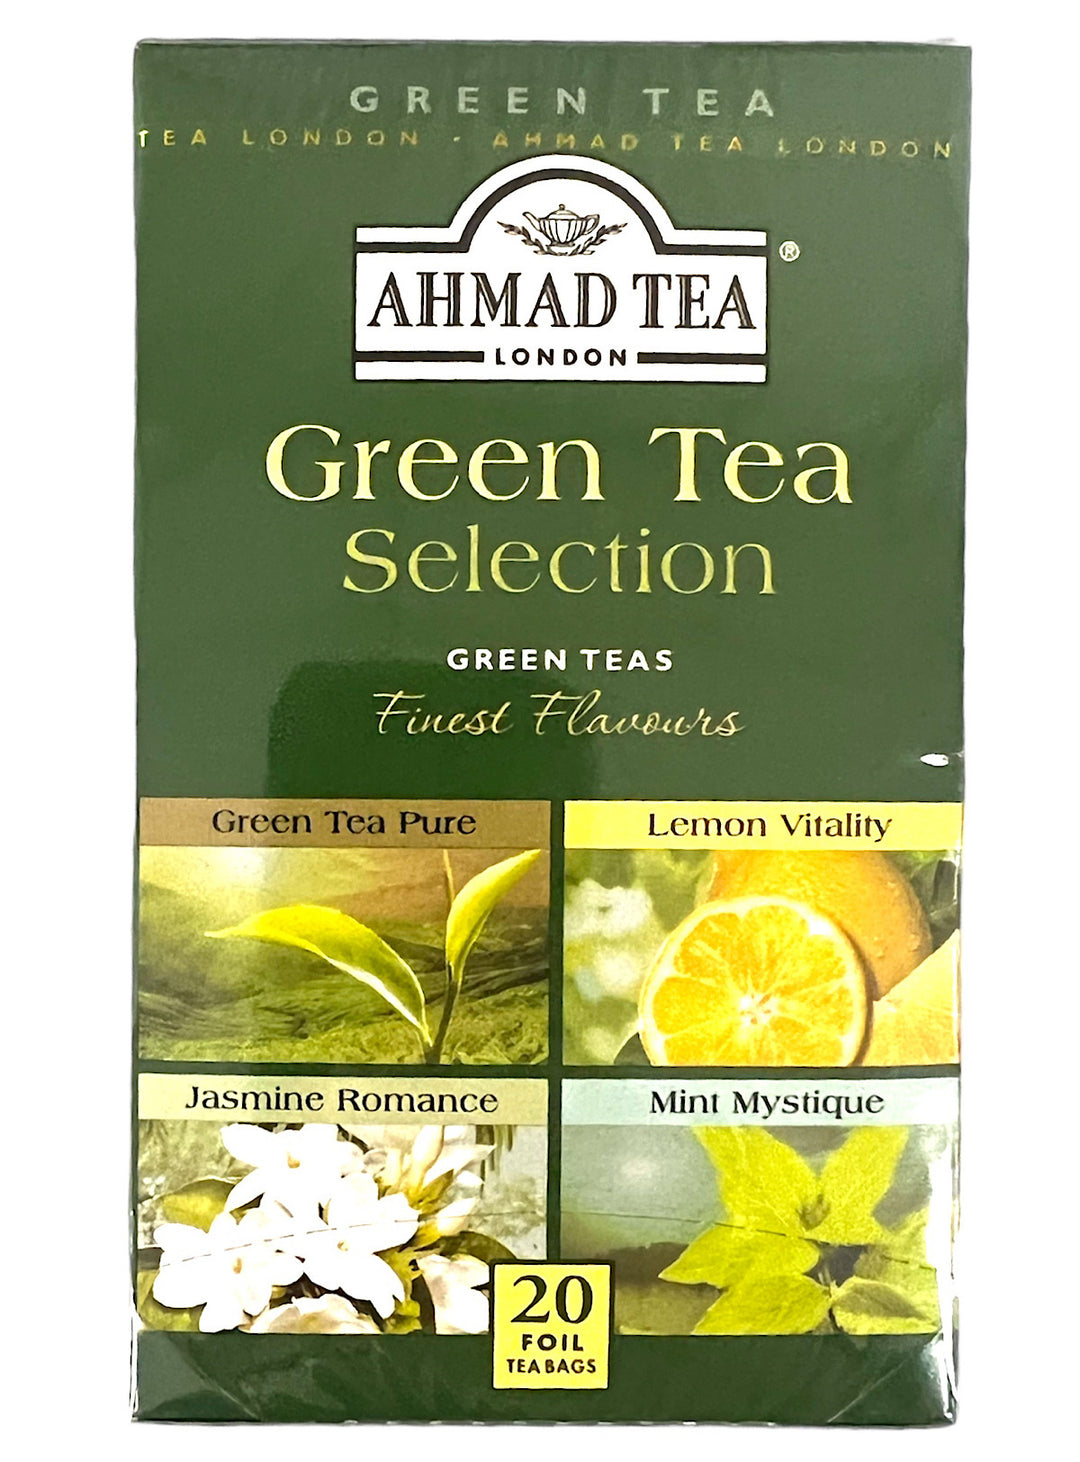 Green Tea Selection - Ahmad Tea - 20 TB